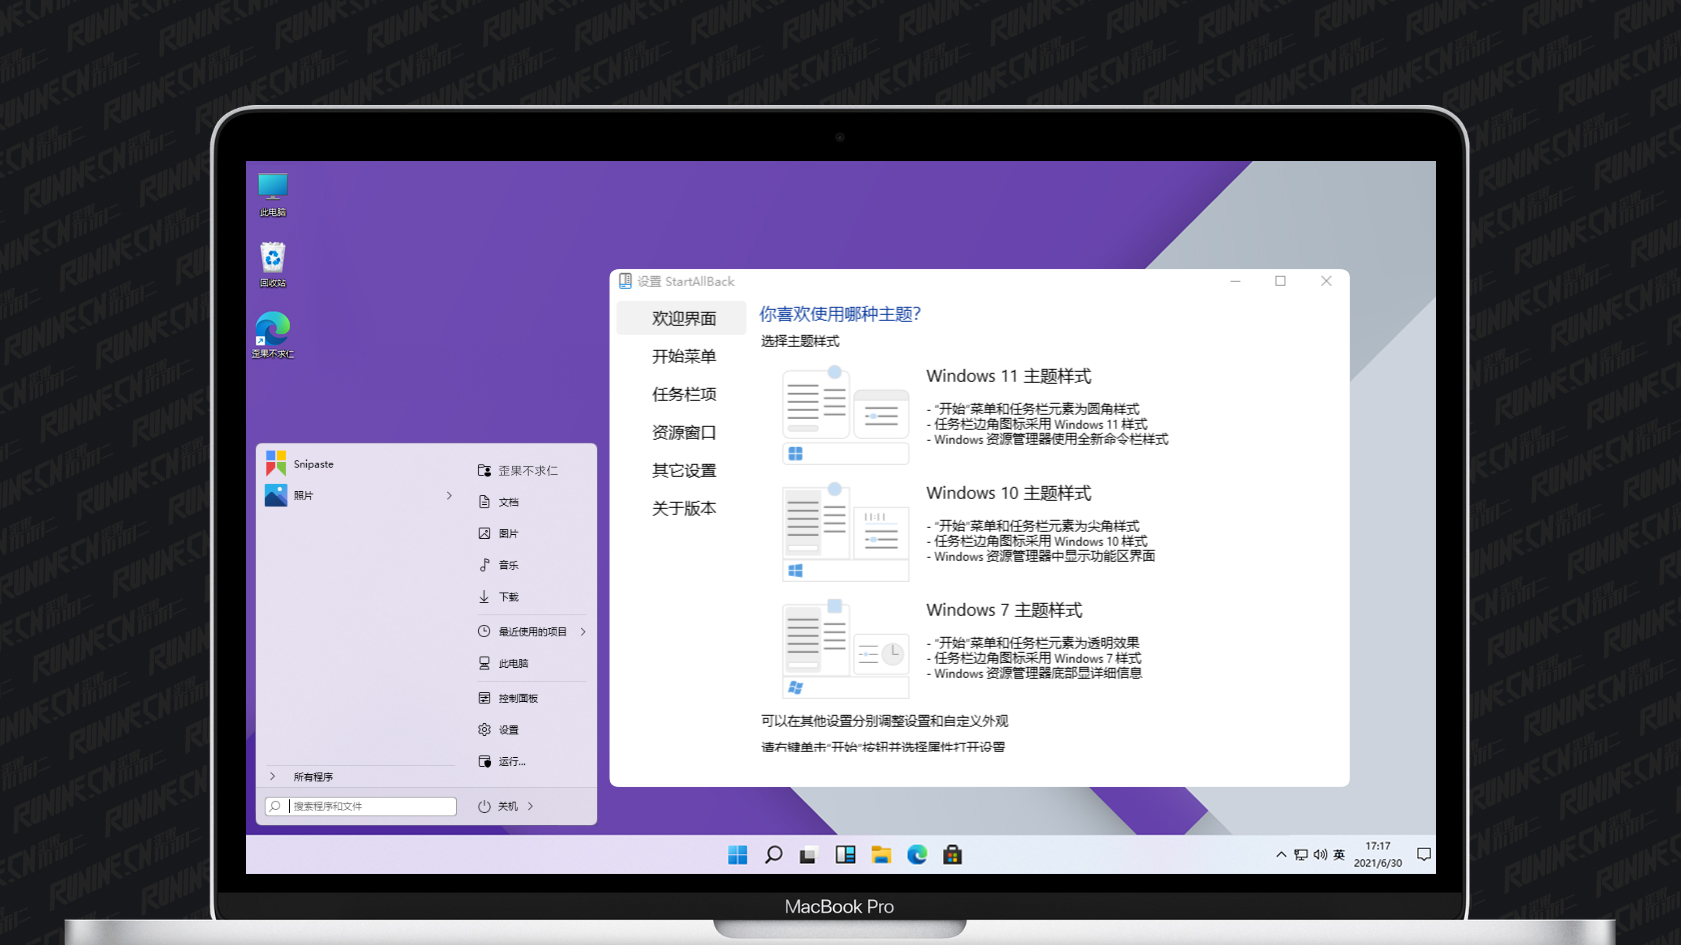 StartAllBack 3.6.7 download the new version for windows